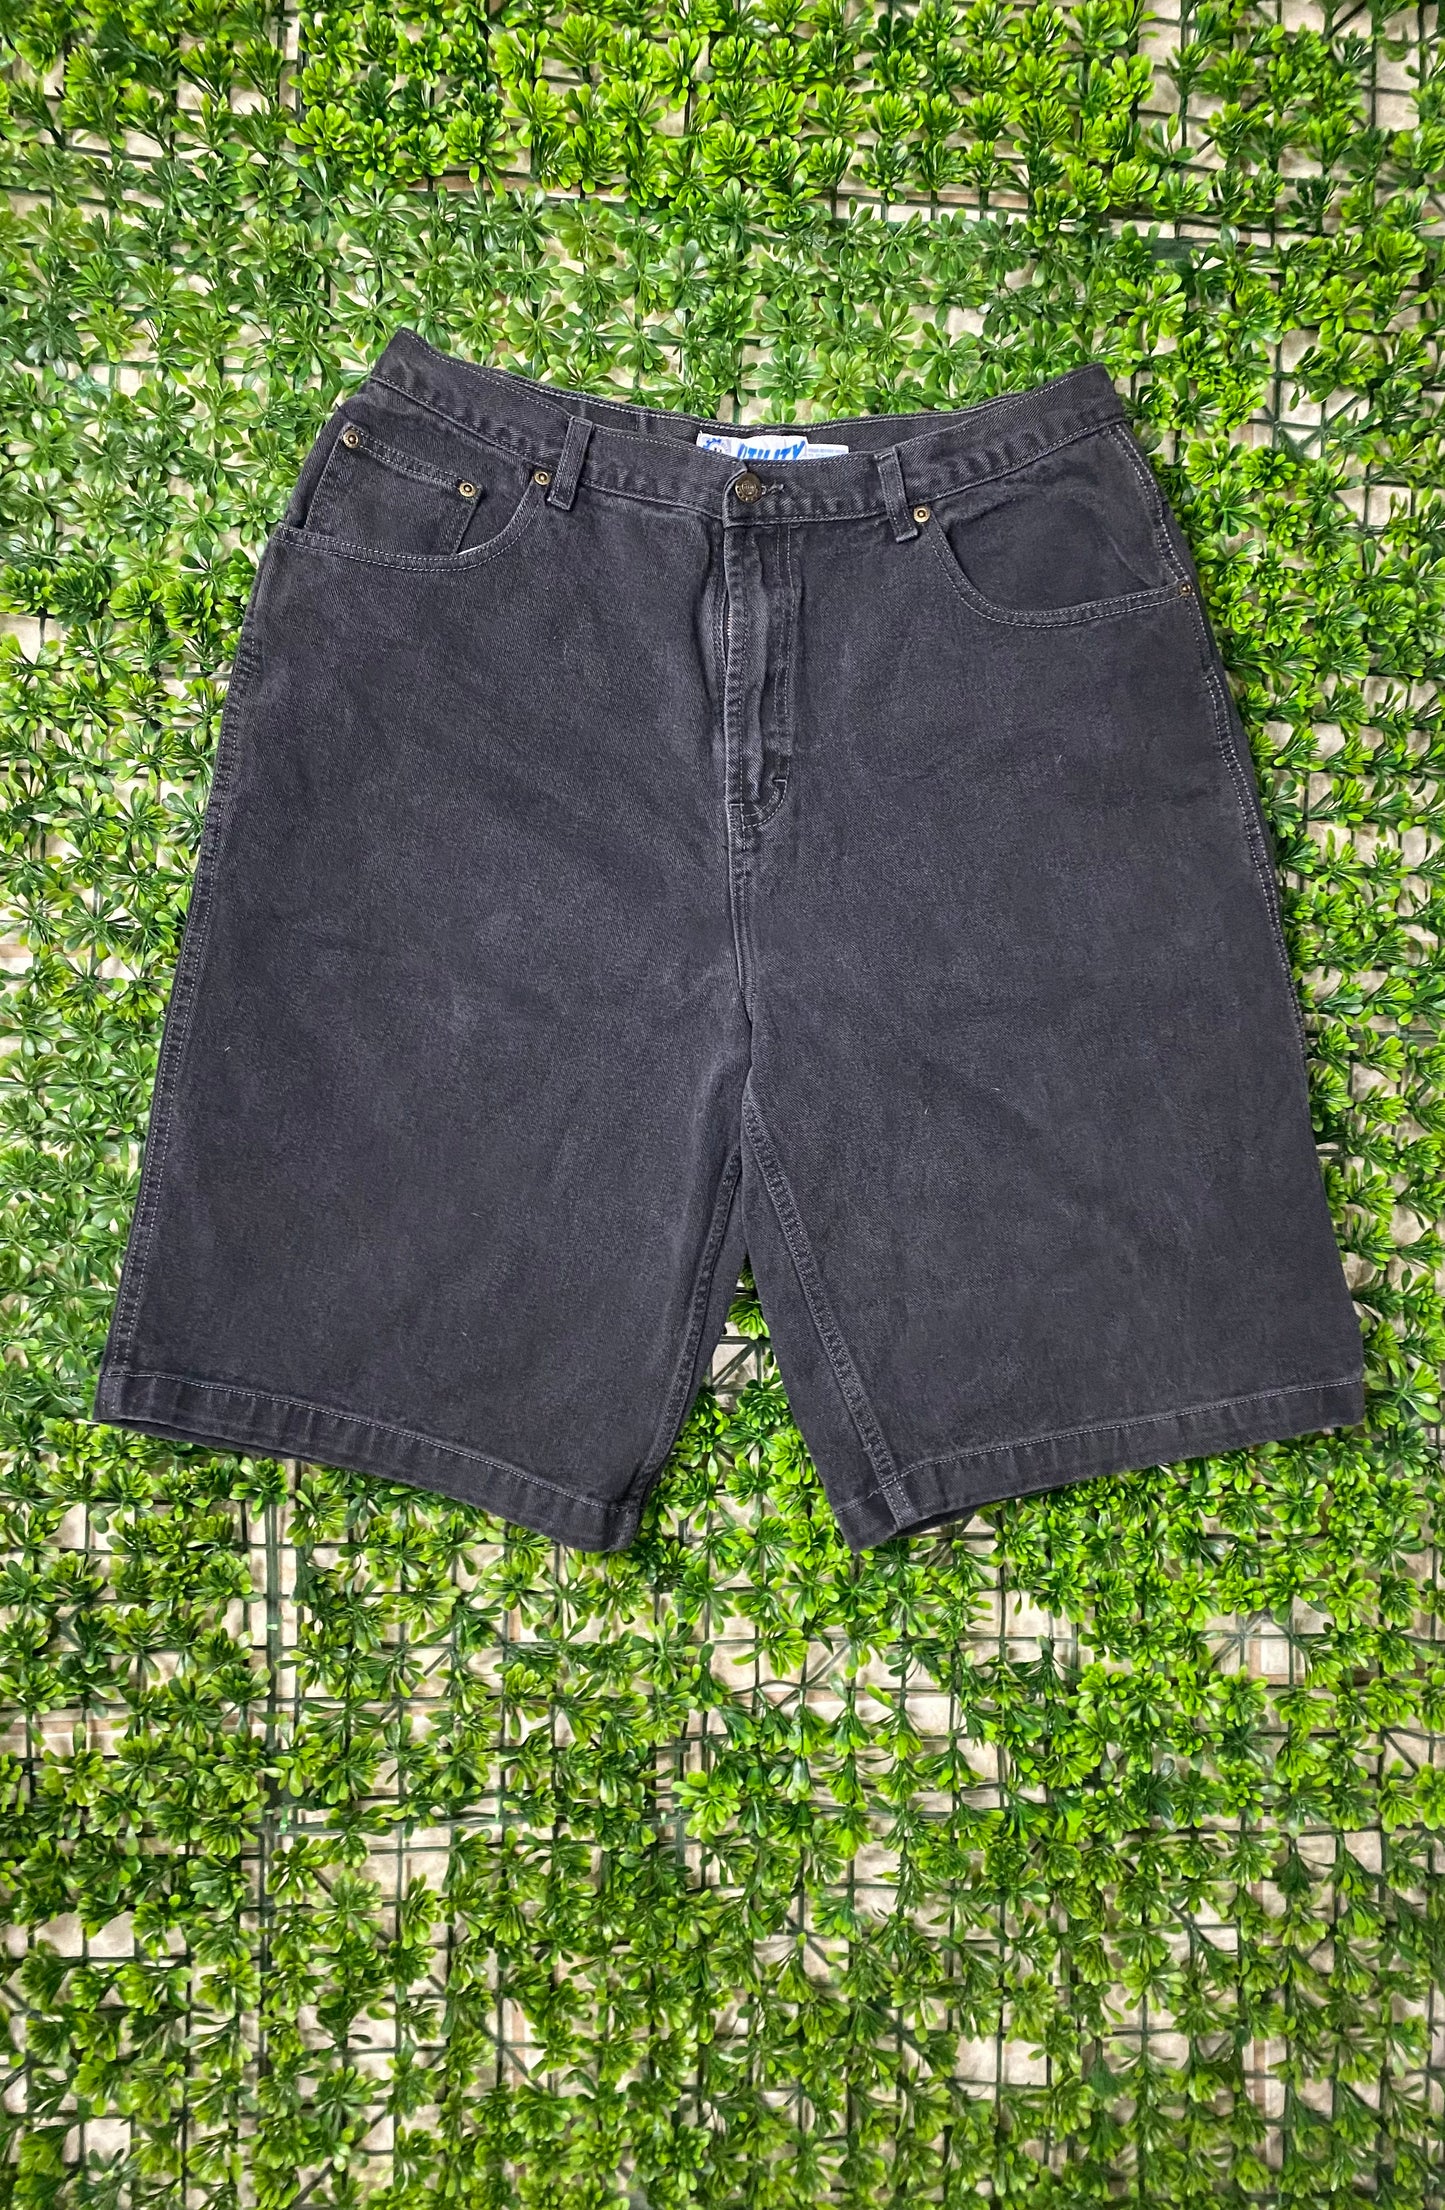 Vintage Utility Jean Shorts